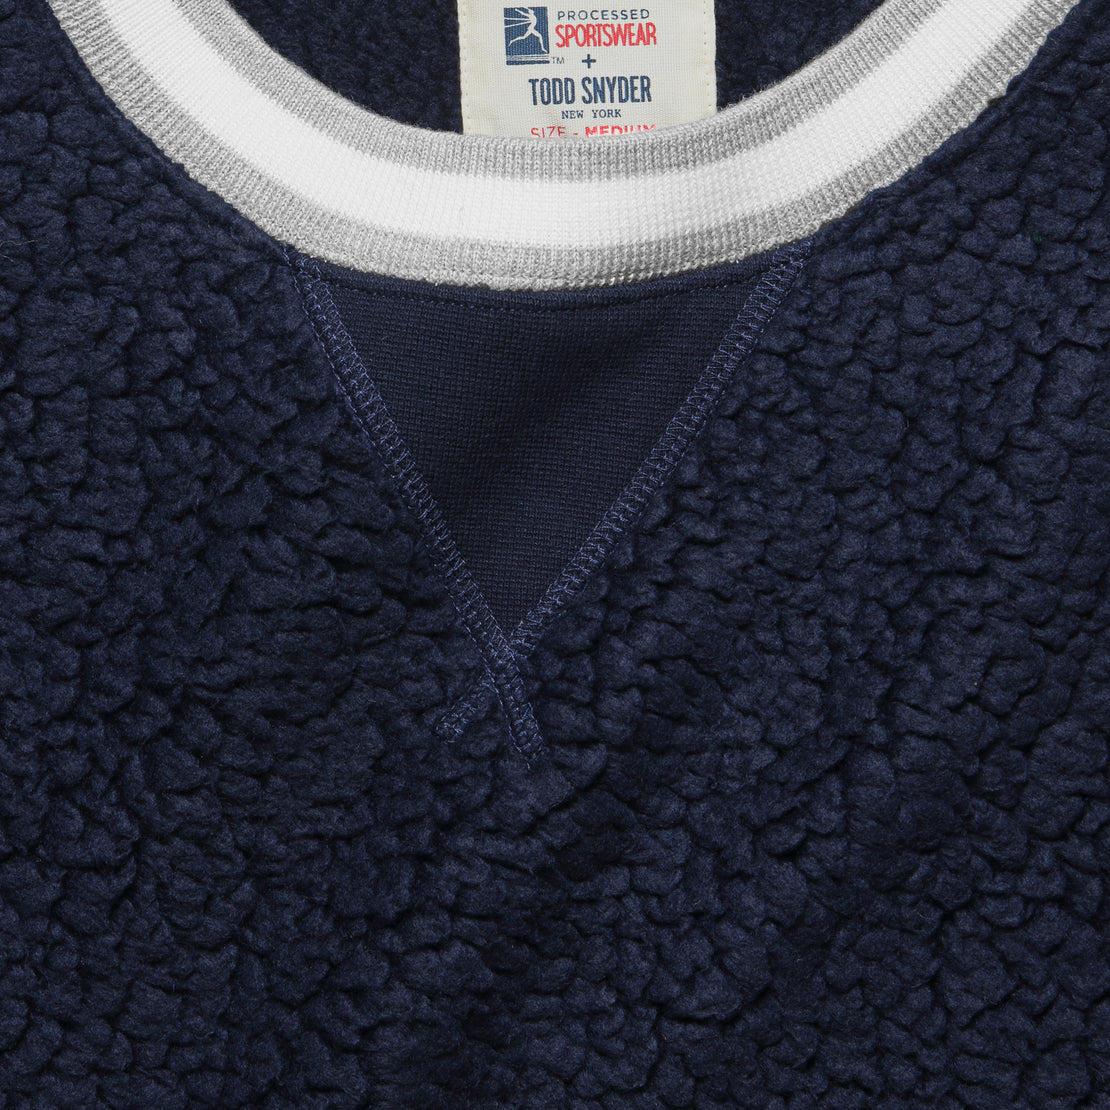 Todd Snyder + Champion - Sherpa Crewneck Shirt - Bright Navy - Todd Snyder - STAG Provisions - Tops - Fleece / Sweatshirt